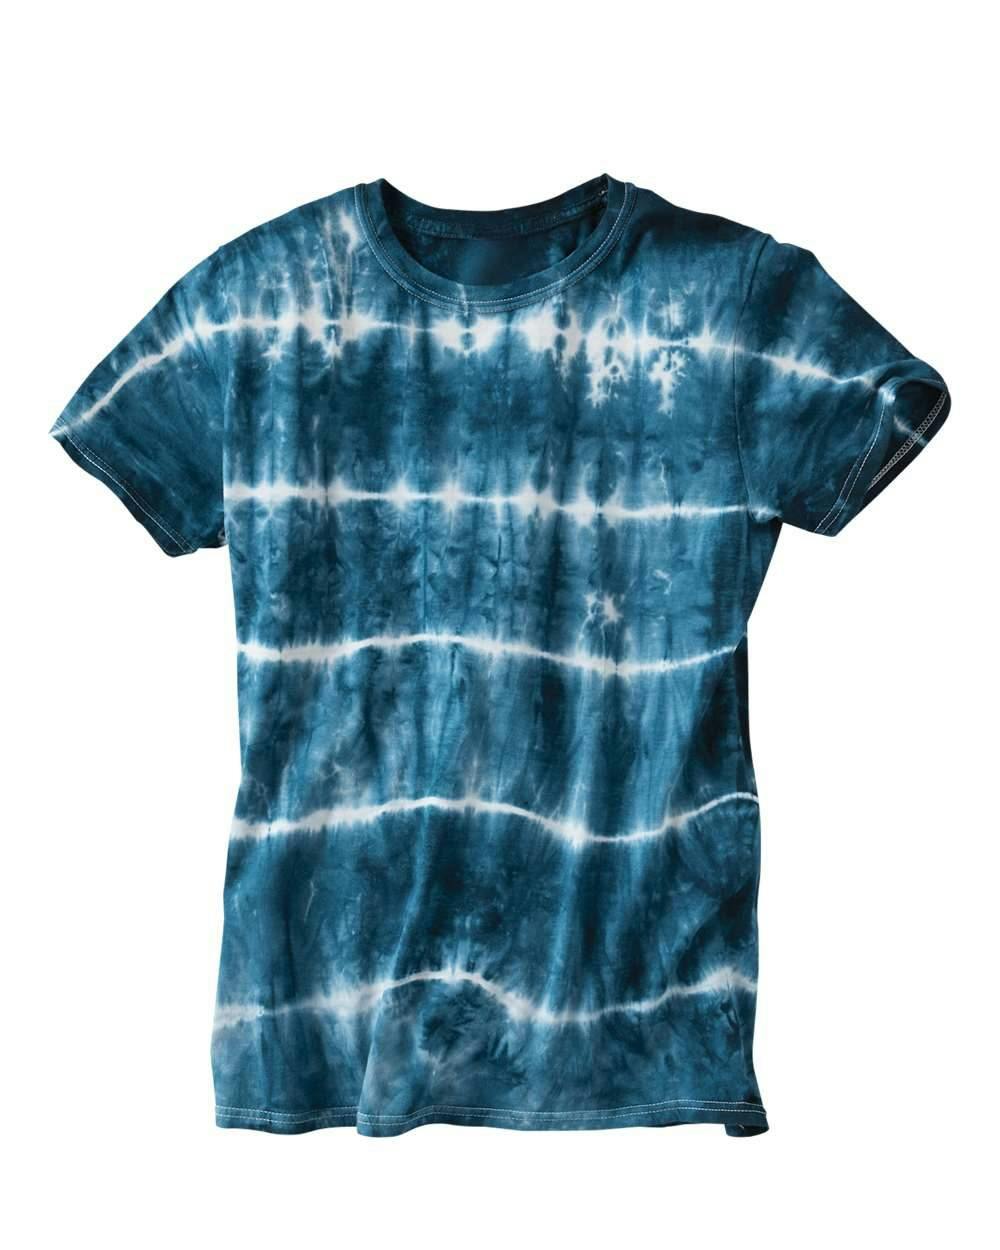 Image for Shibori Tie-Dyed T-Shirt - 640SB